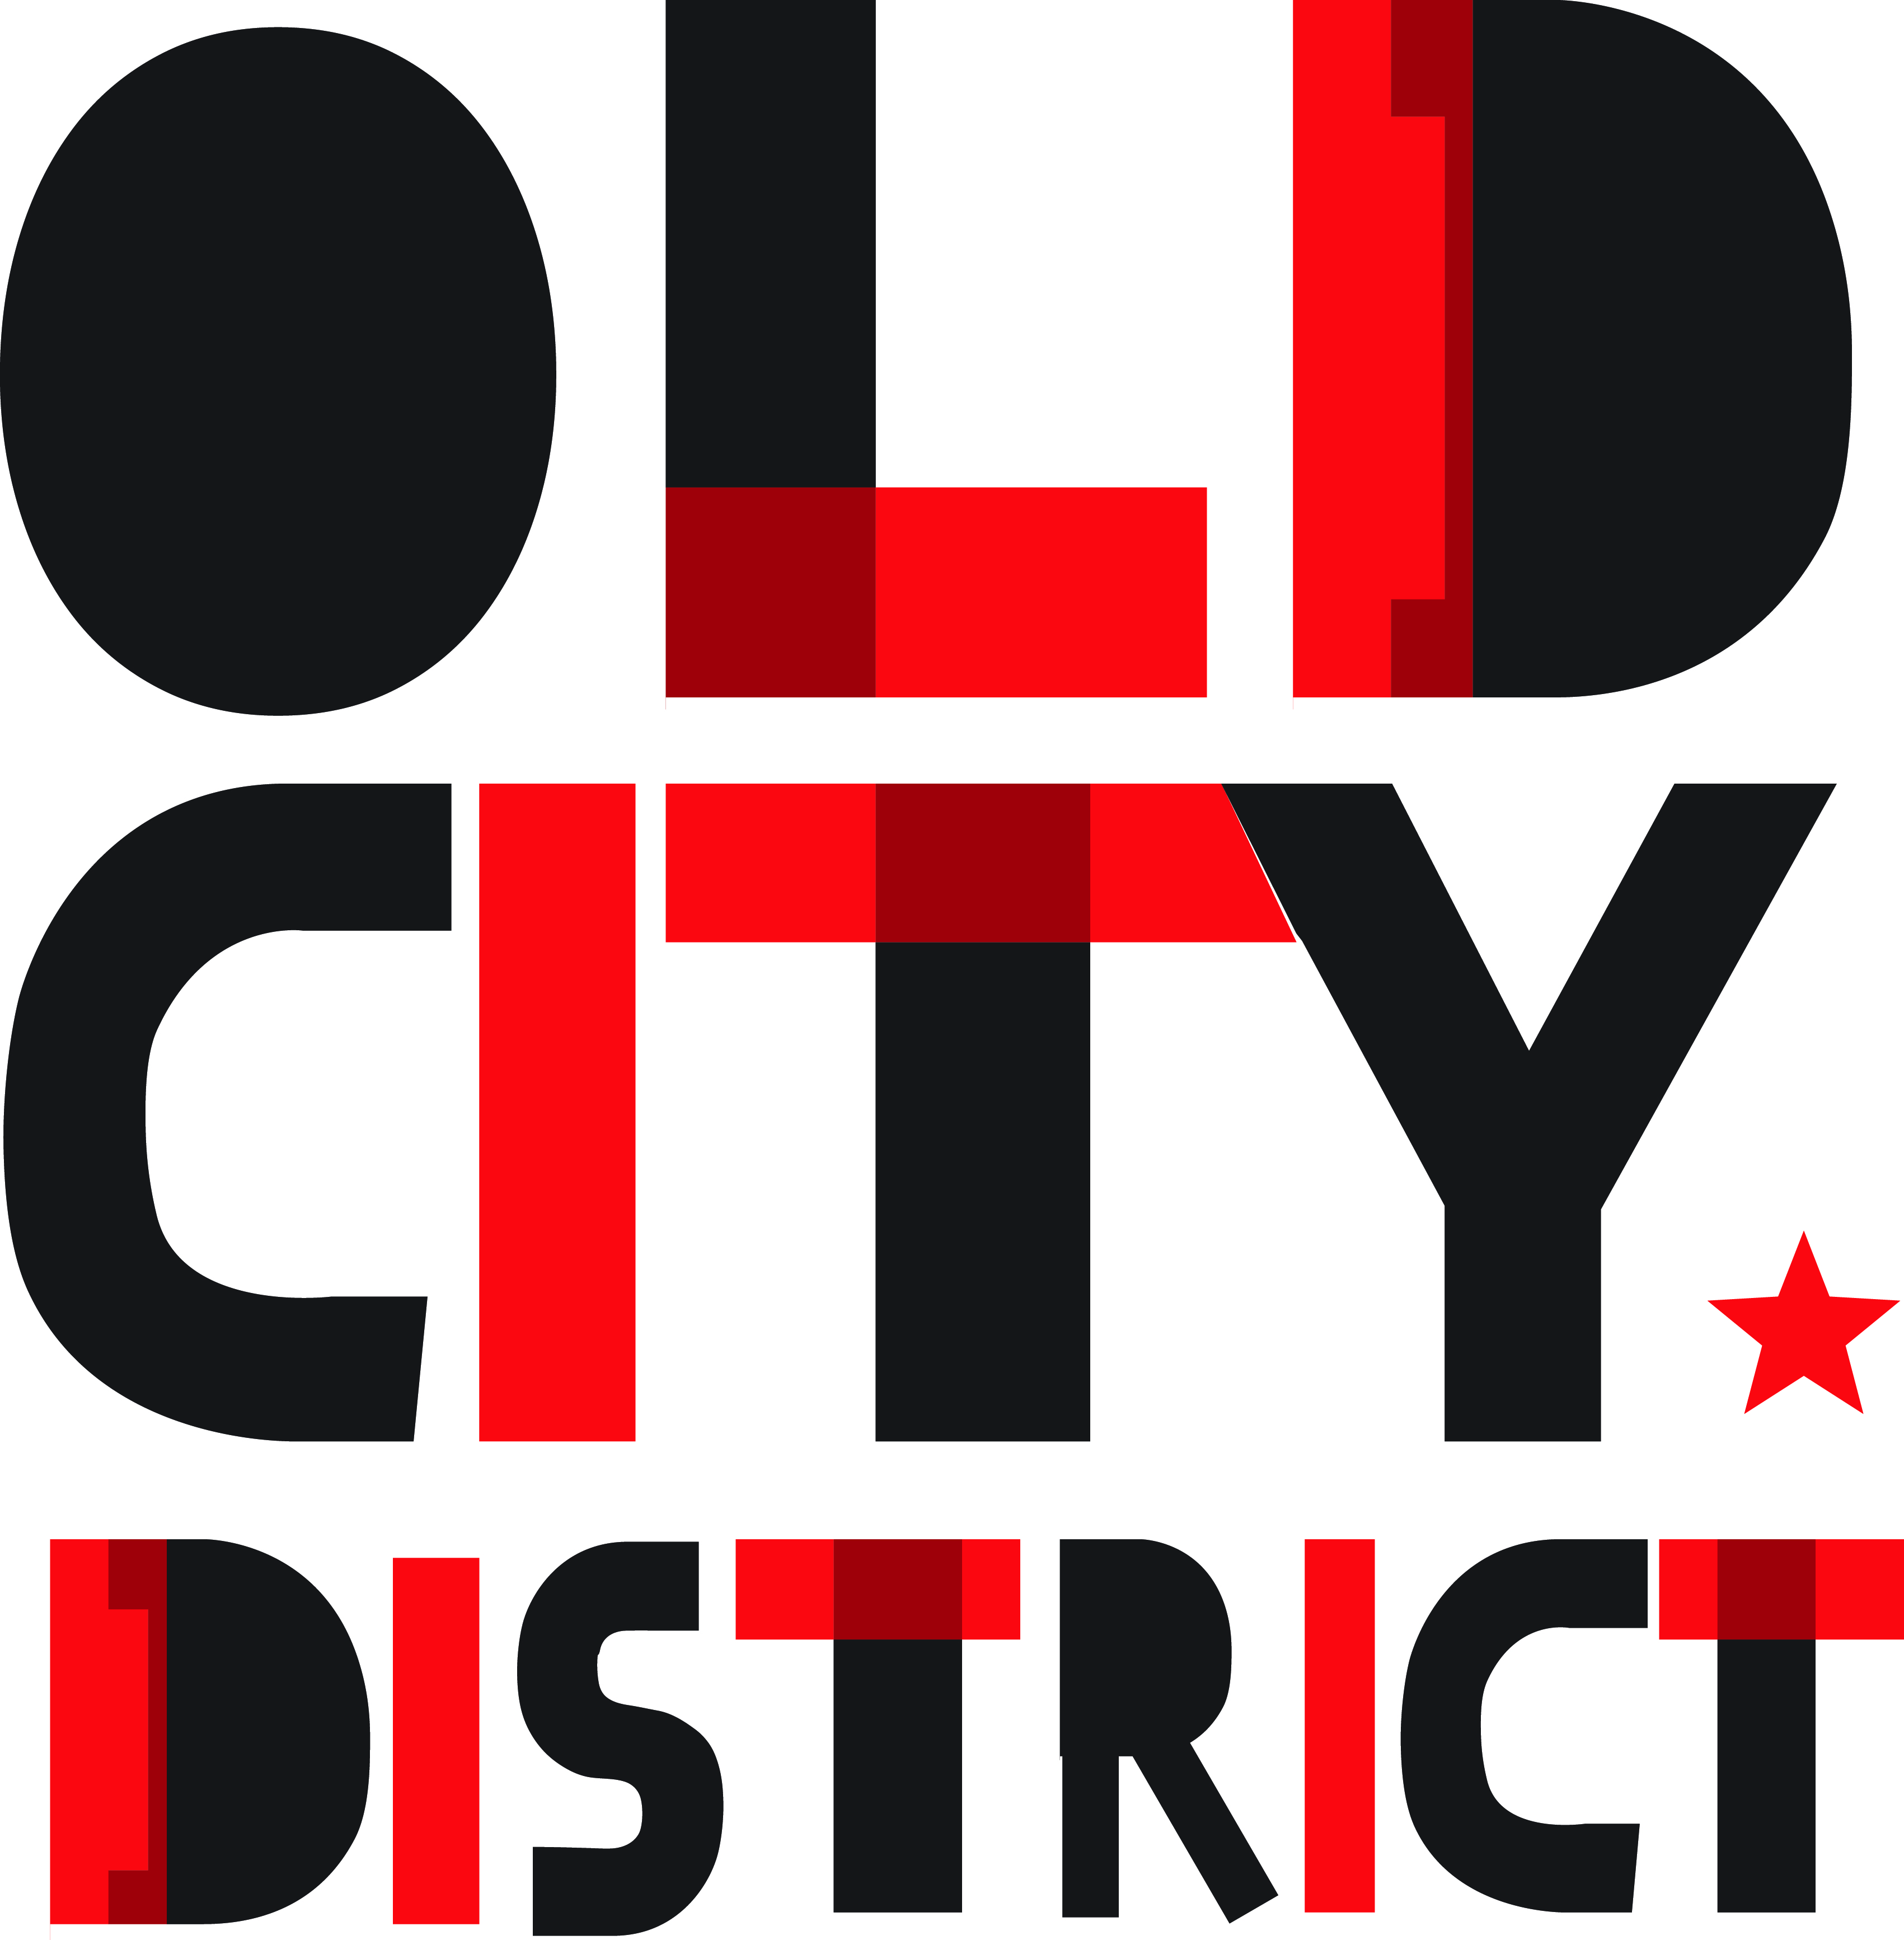 Old City District logo